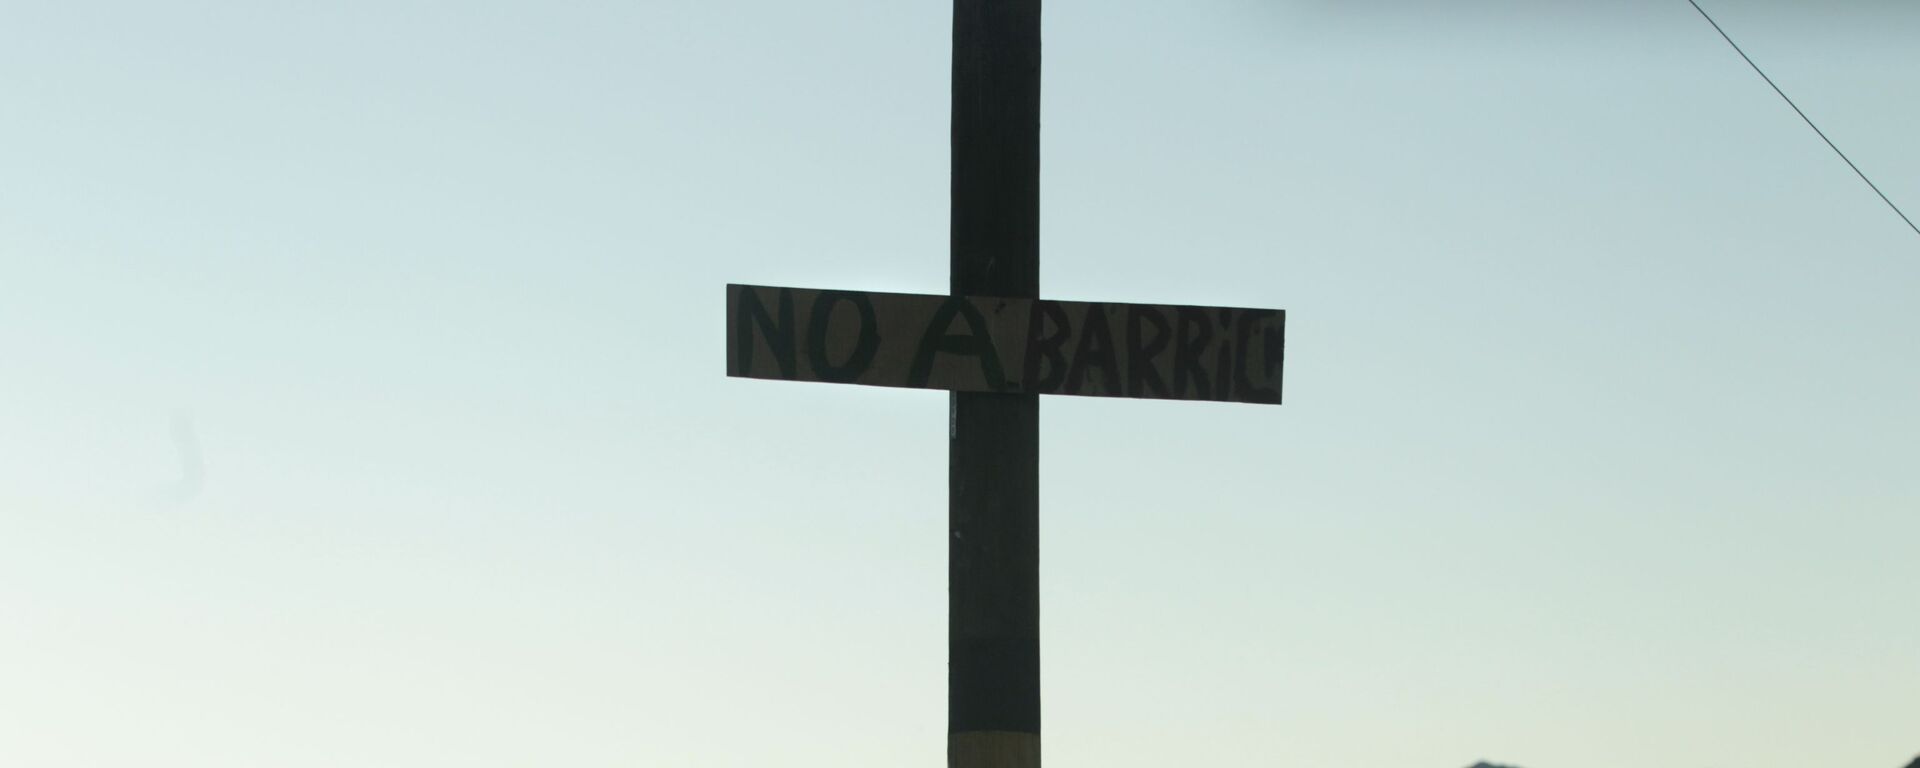 Una cruz que lleva el mensaje 'No a Barrick' cerca del proyecto Pascua-Lama de Barrick Gold Corp. en el norte de Chile - Sputnik Mundo, 1920, 13.01.2020